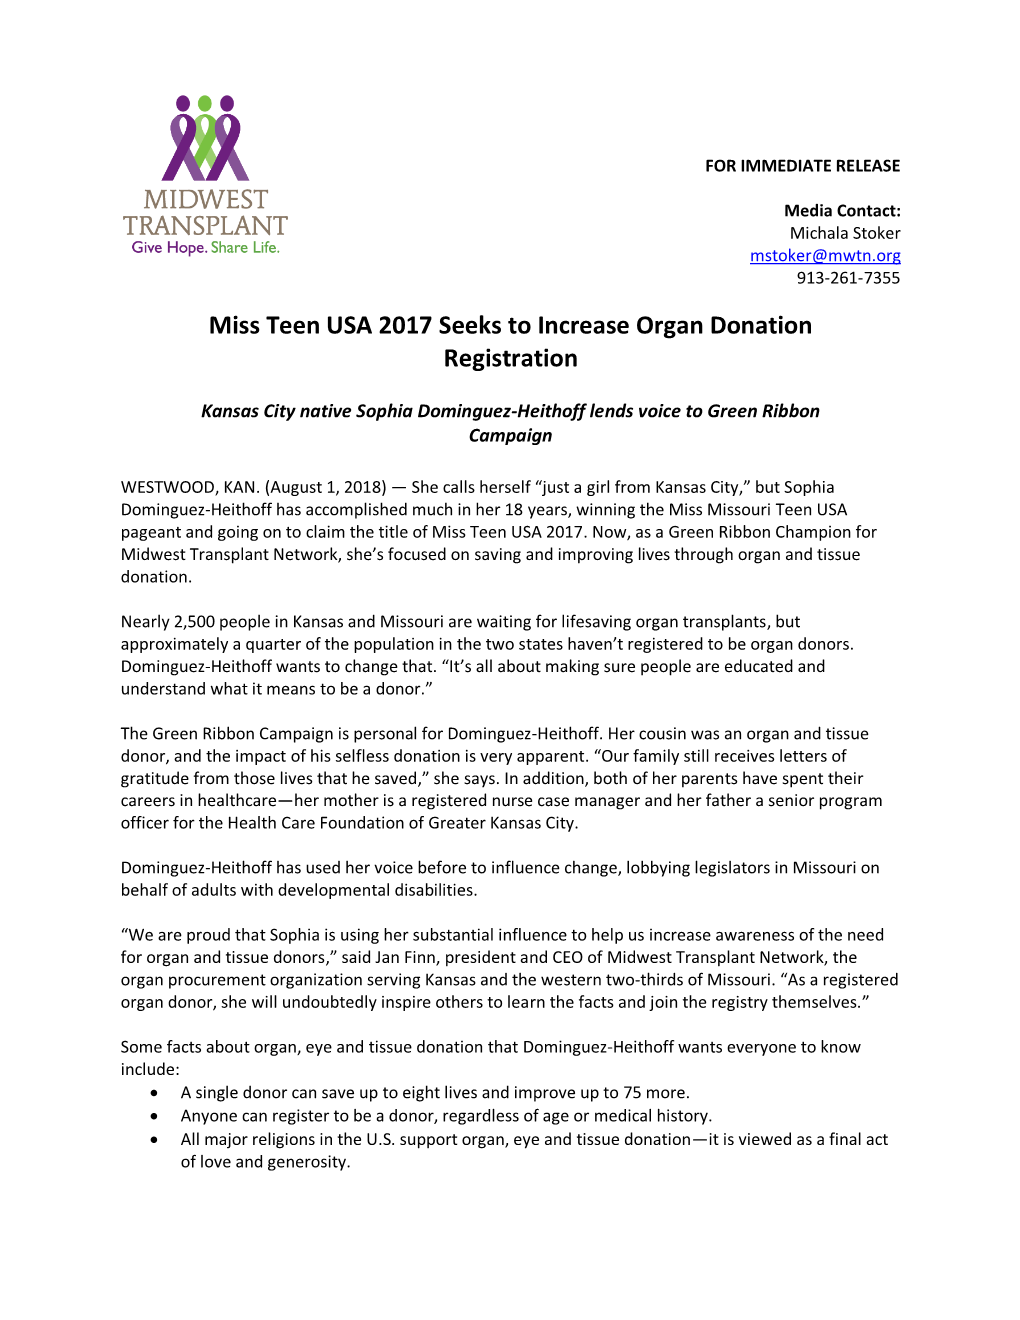 Miss Teen USA 2017 Seeks to Increase Organ Donation Registration